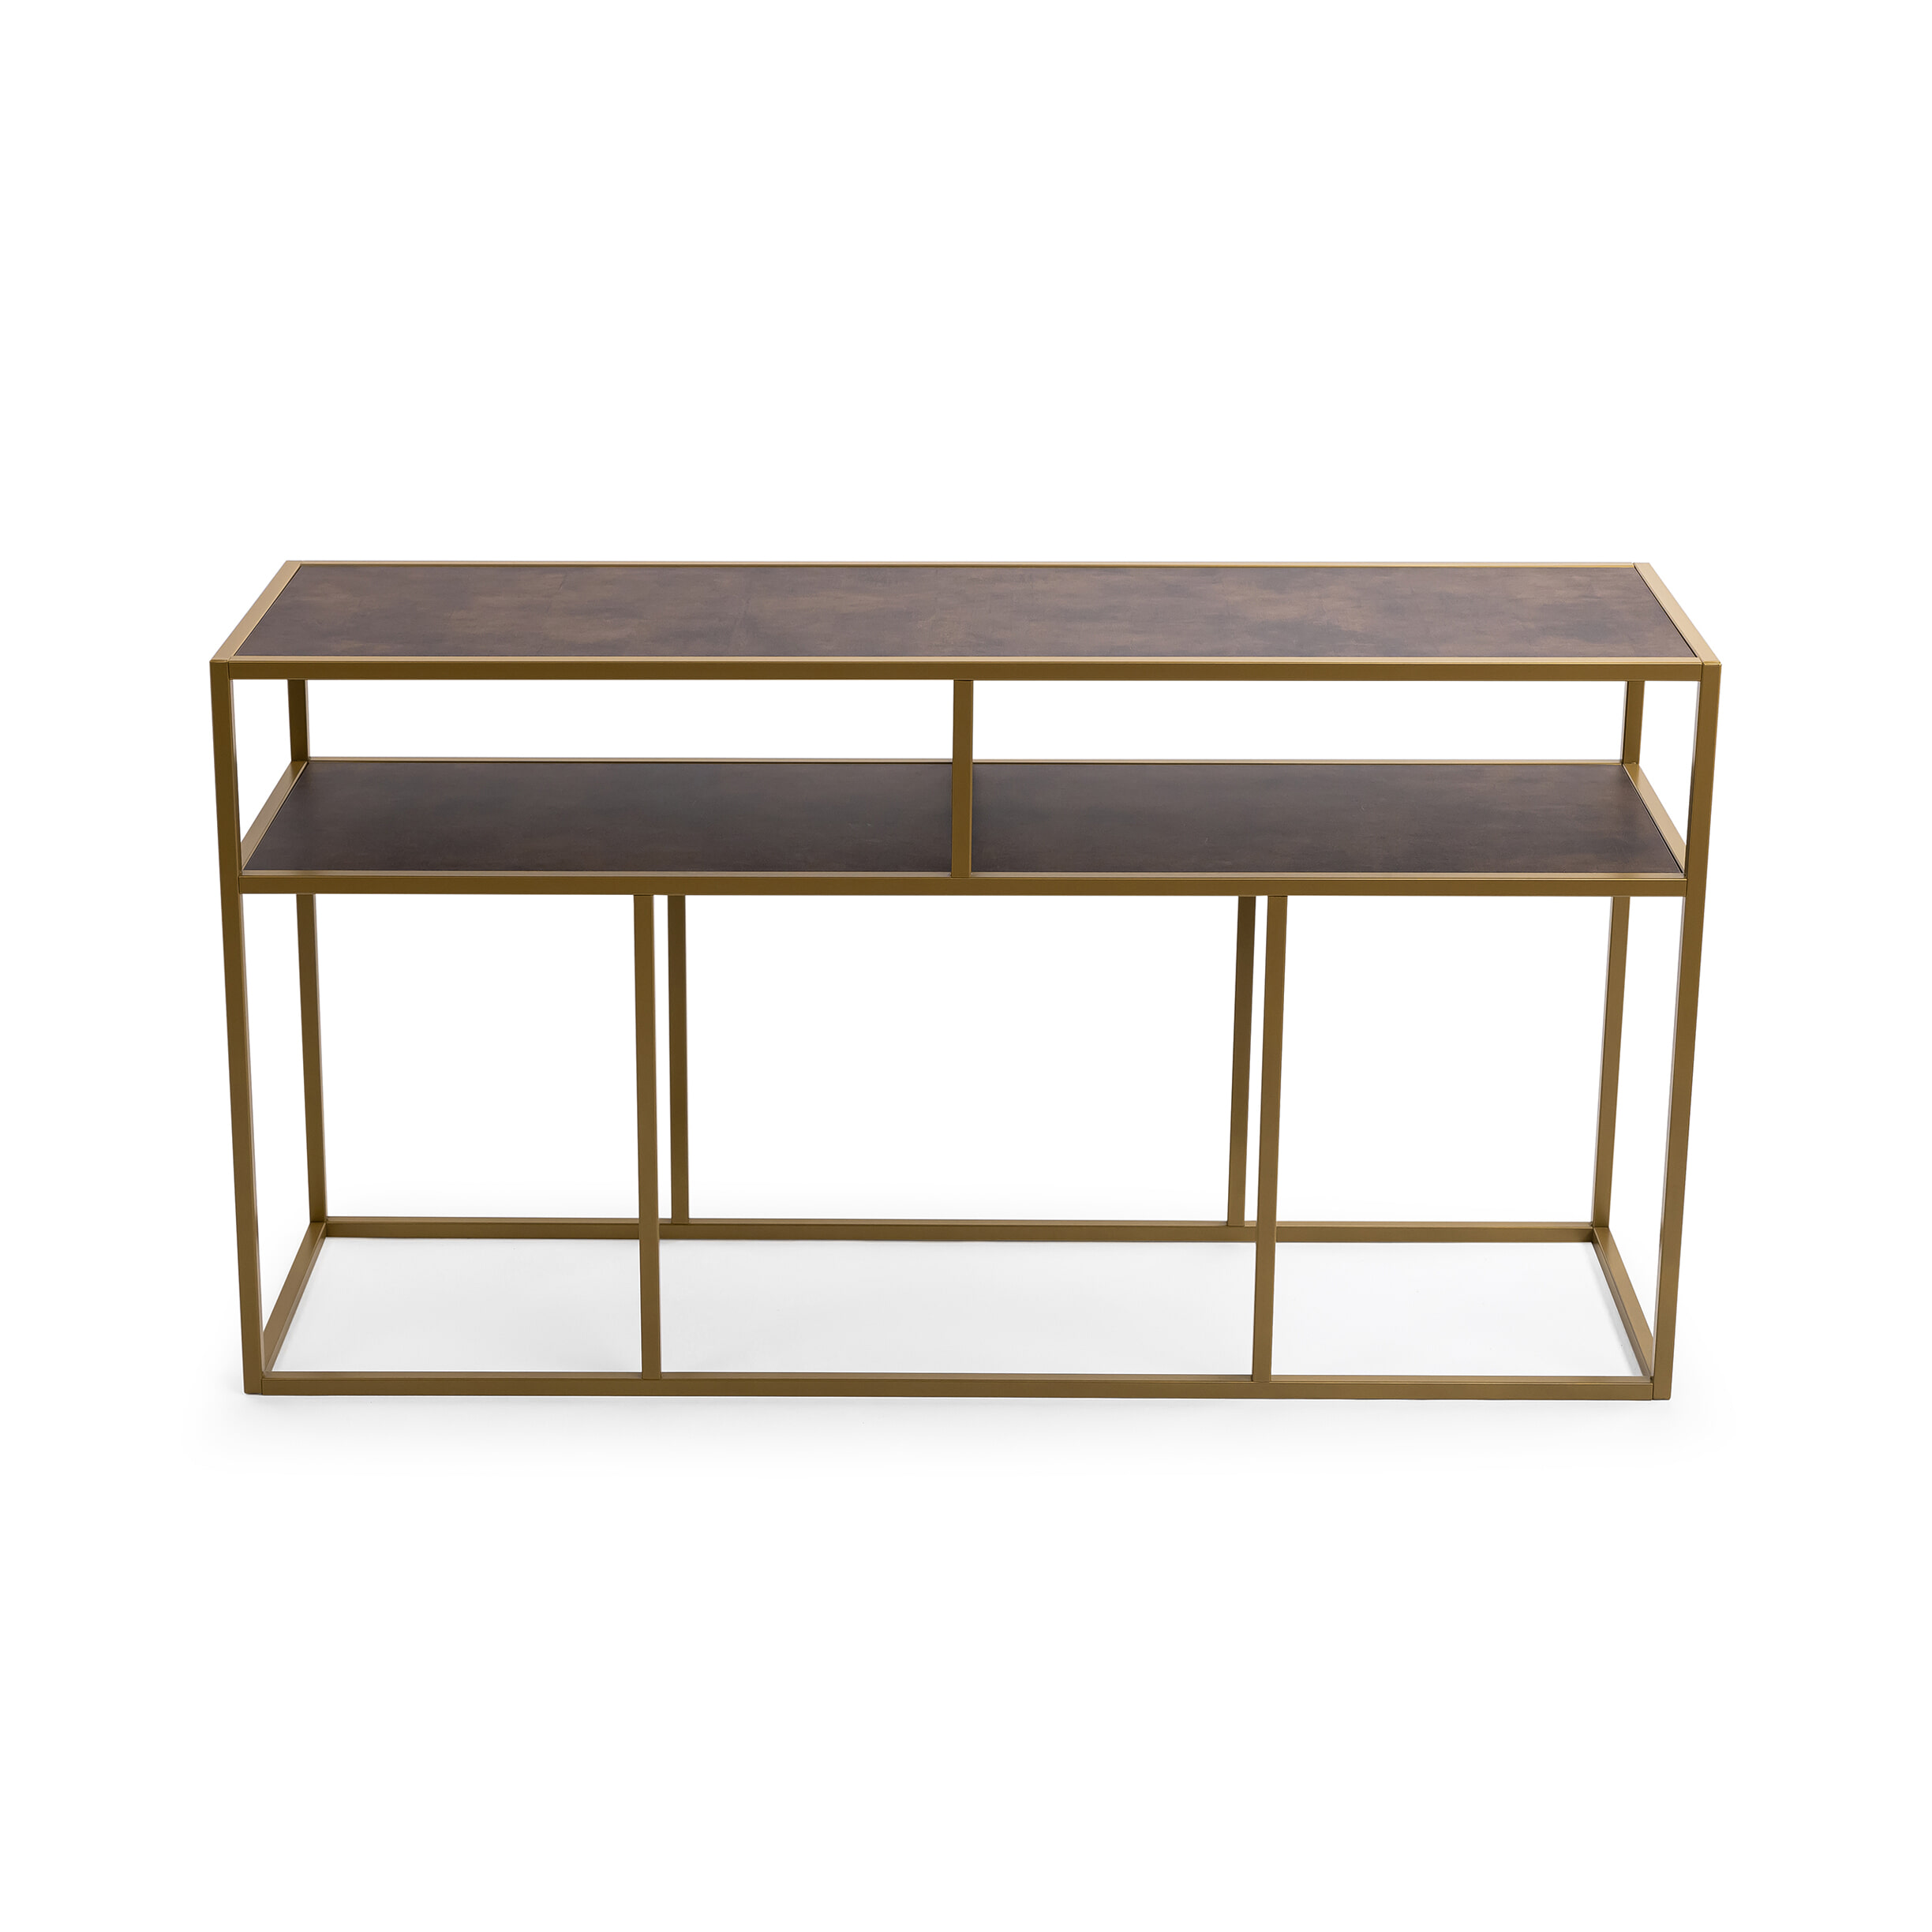 STALUX Side-table Teun 150cm - goud / lederlook bruin